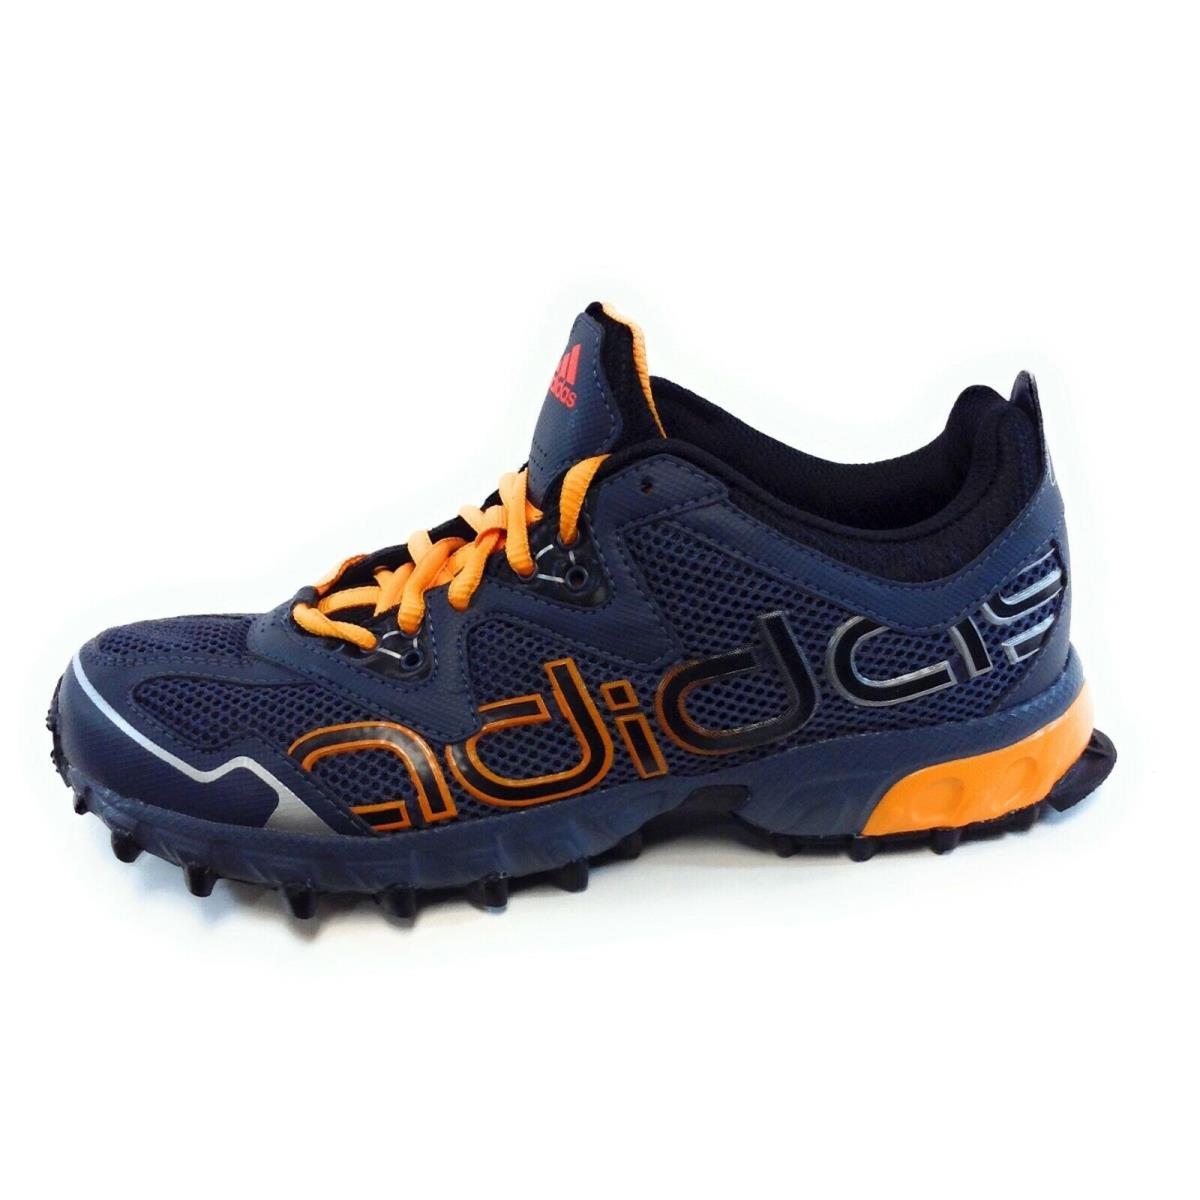 Youth Girls Kids Adidas Vigor Trail 2 G56370 Grey Orange 2012 DS Sneakers Shoes - Grey